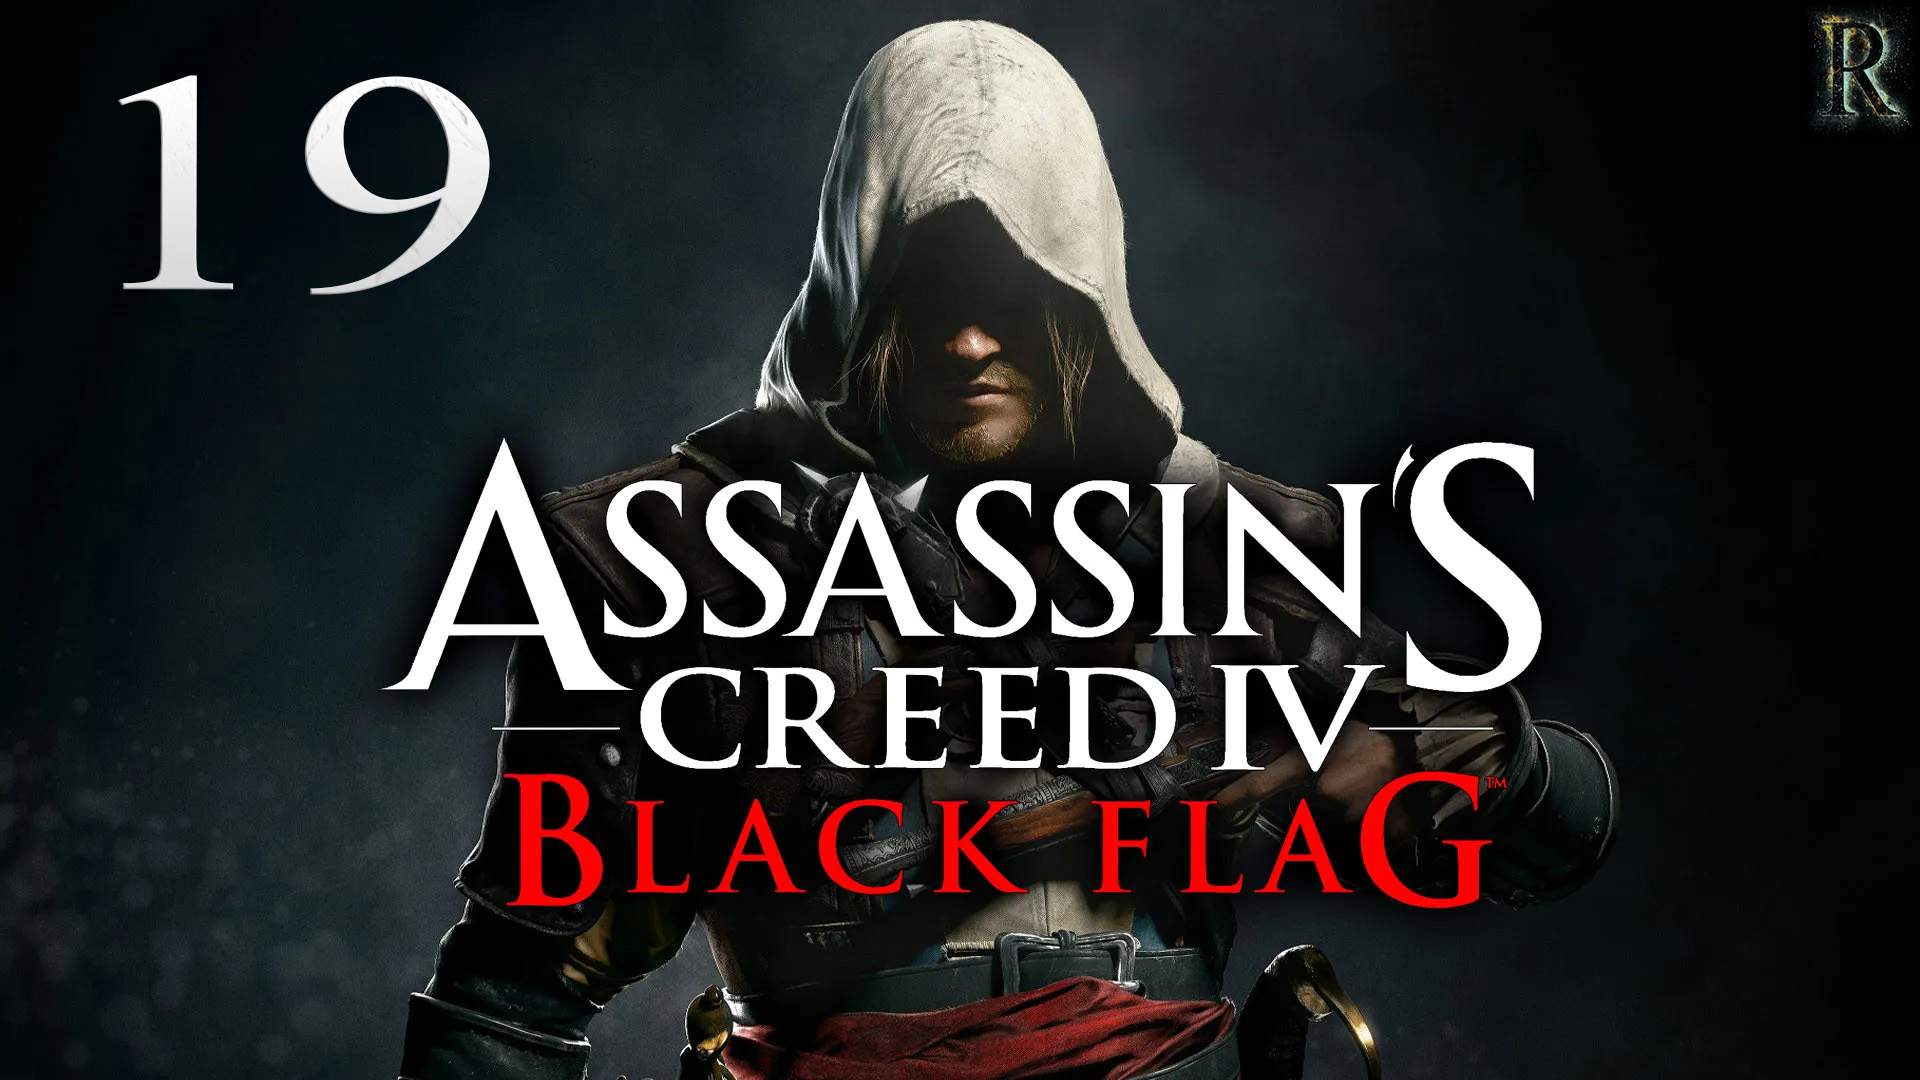 Assassin's Creed IV Black Flag -  19 серия. (Убийство и хаос/ Обсерватория / Наше время)